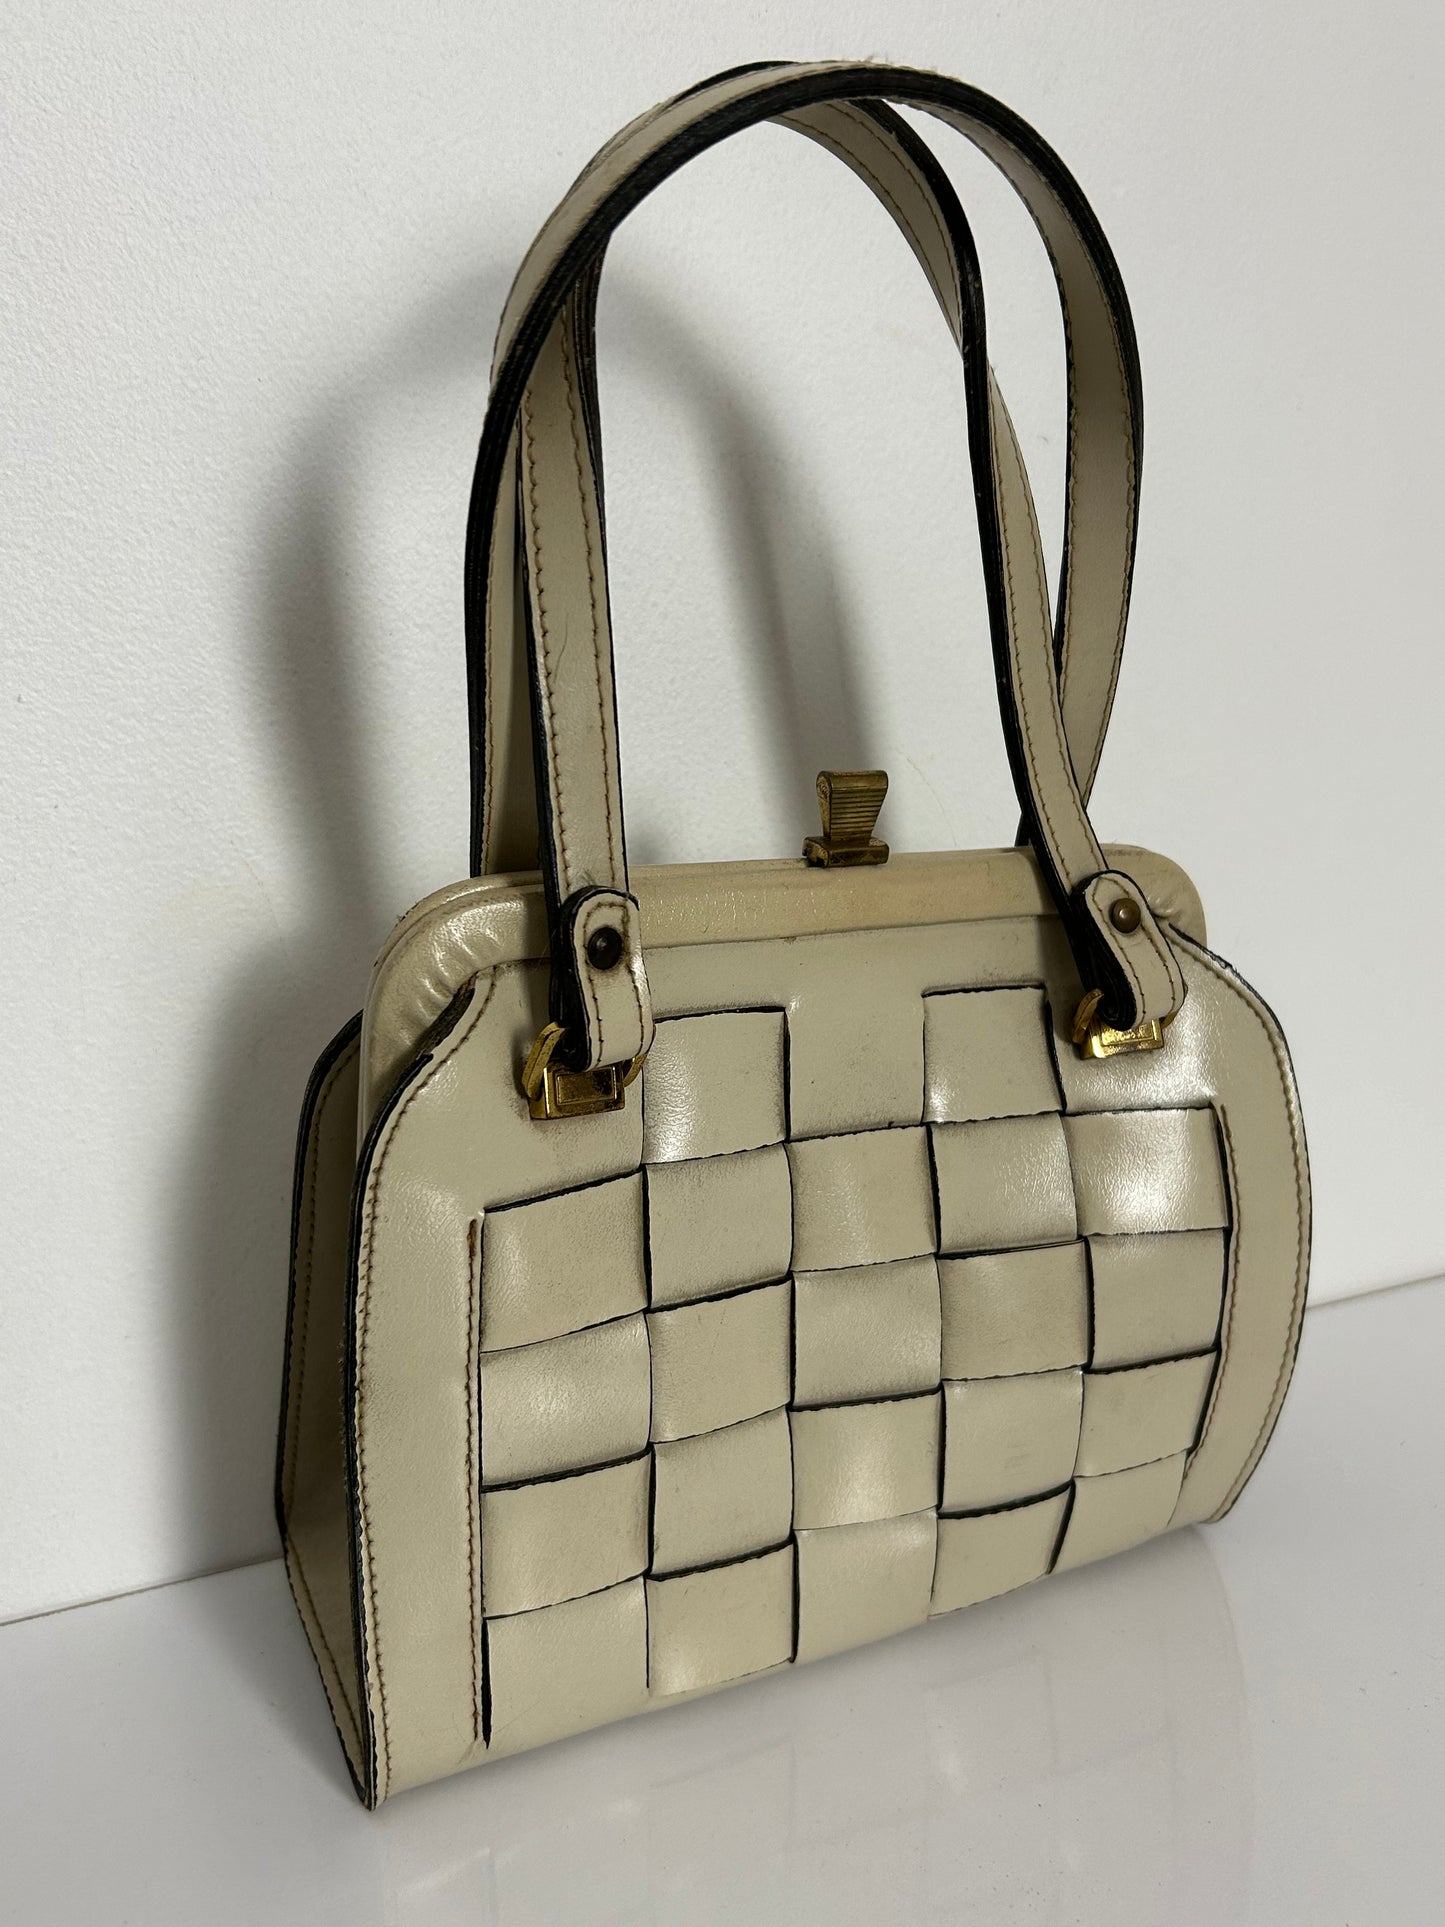 Vintage 1960s Mod Cream Leather Weave Effect Small Kelly Style Handbag